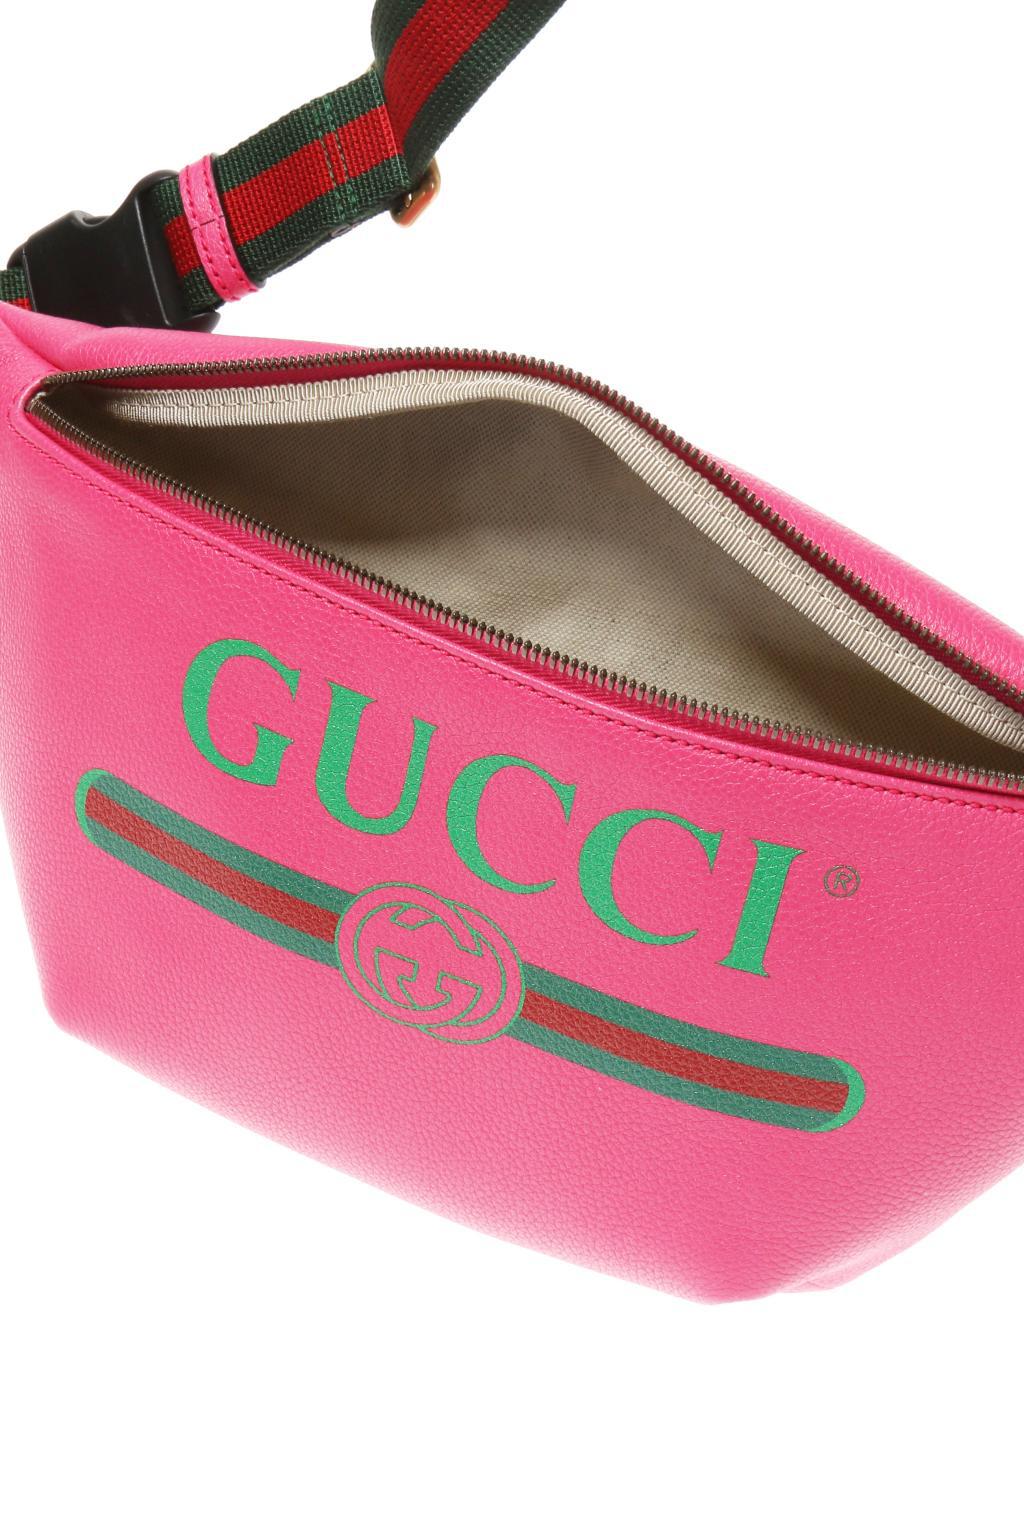 Gucci Leather Logo-printed Belt Bag in Pink for Men - Lyst